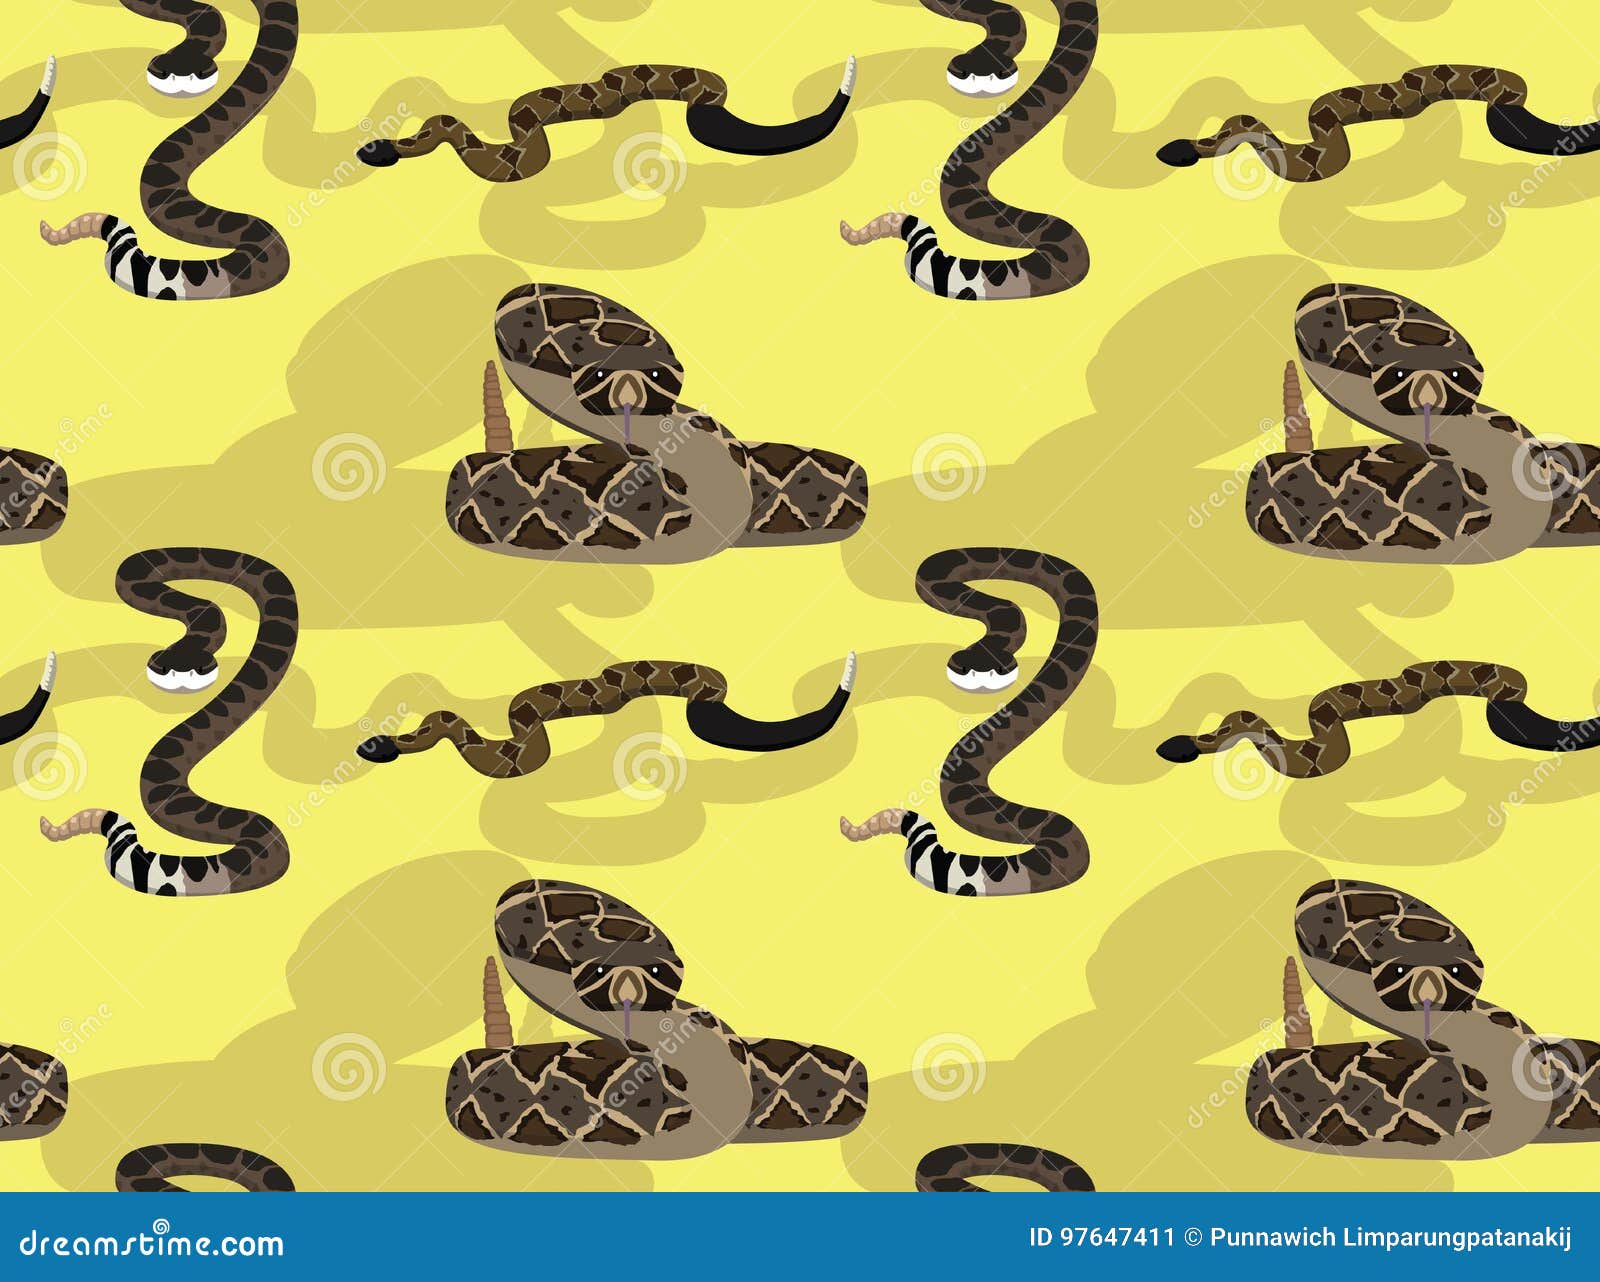 Wallpaper  4320x3240 px predator rattlesnake reptile snake snakes  4320x3240  wallup  806178  HD Wallpapers  WallHere